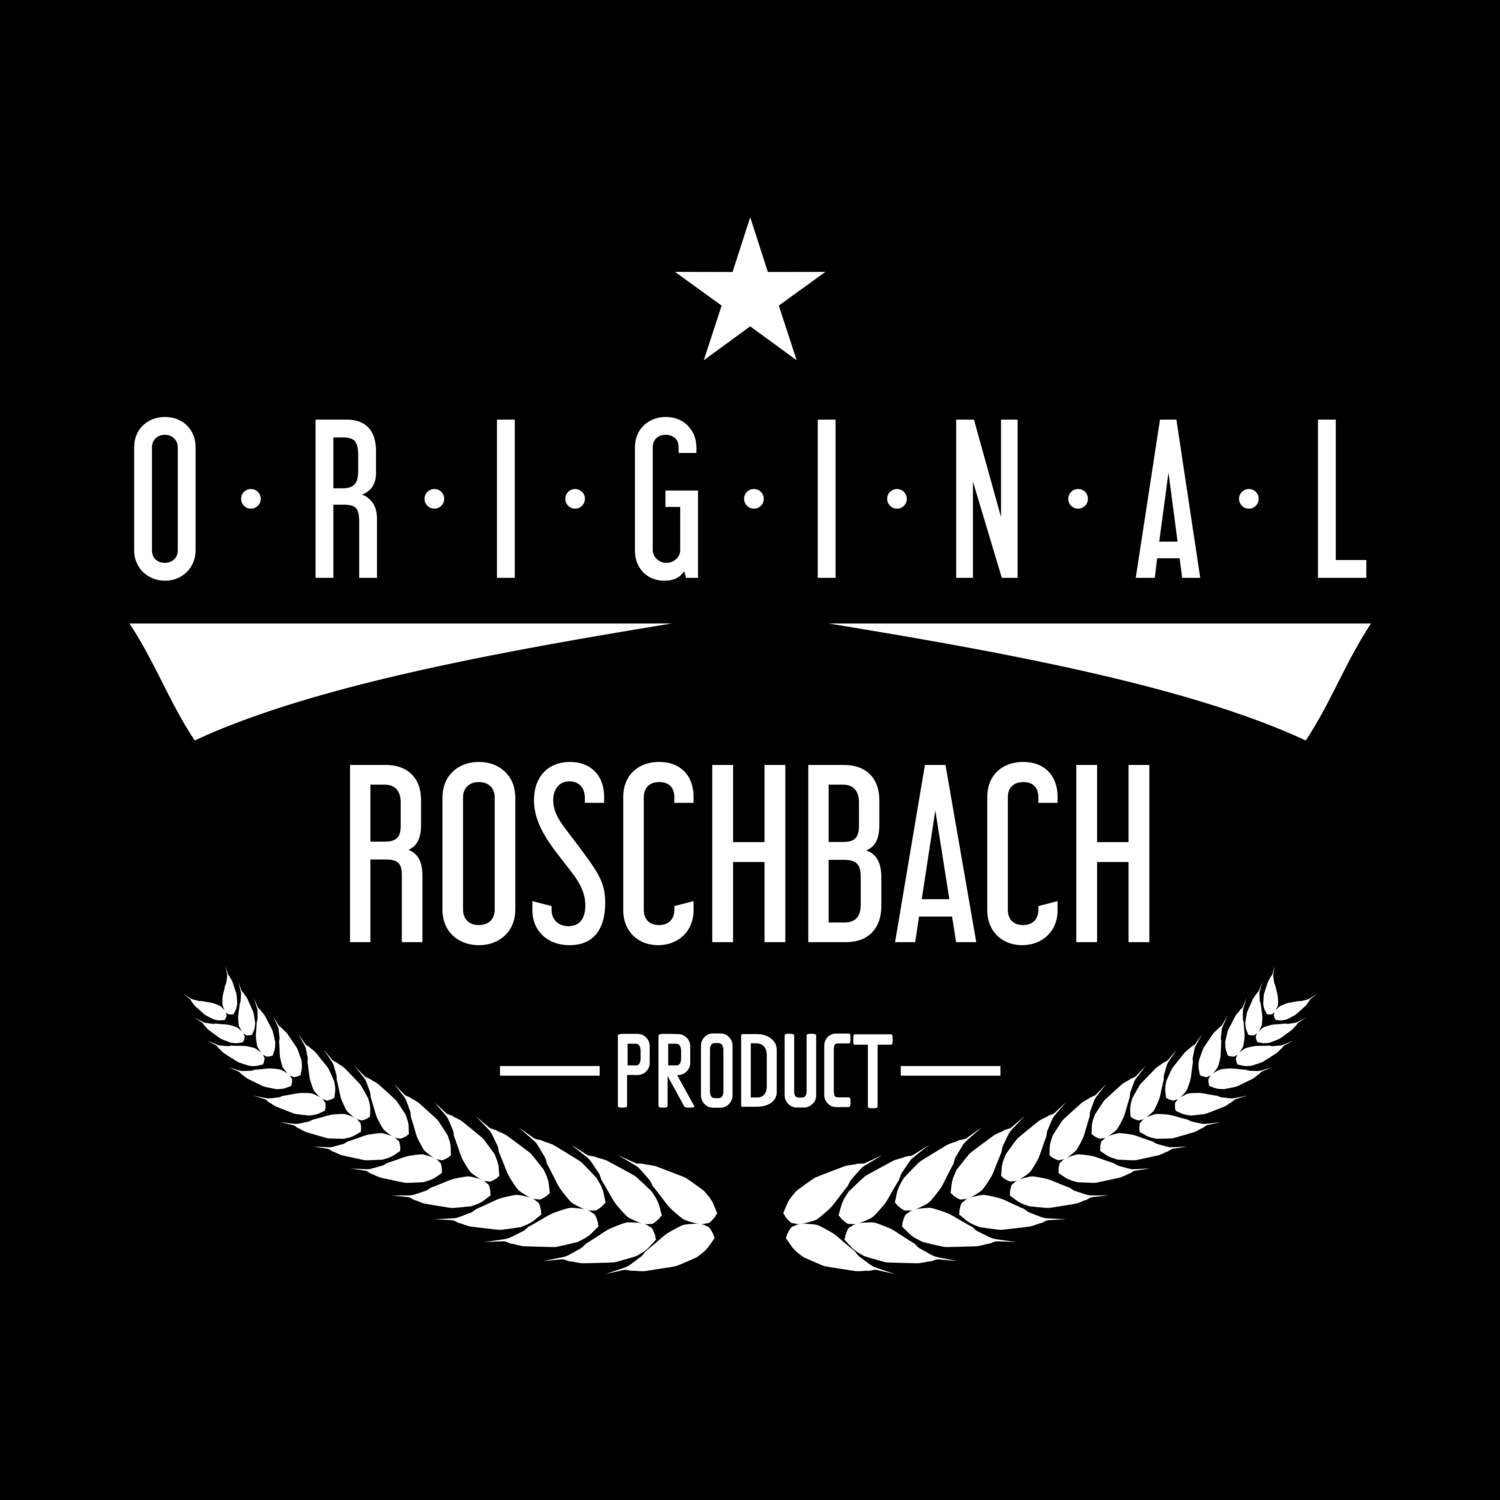 Roschbach T-Shirt »Original Product«